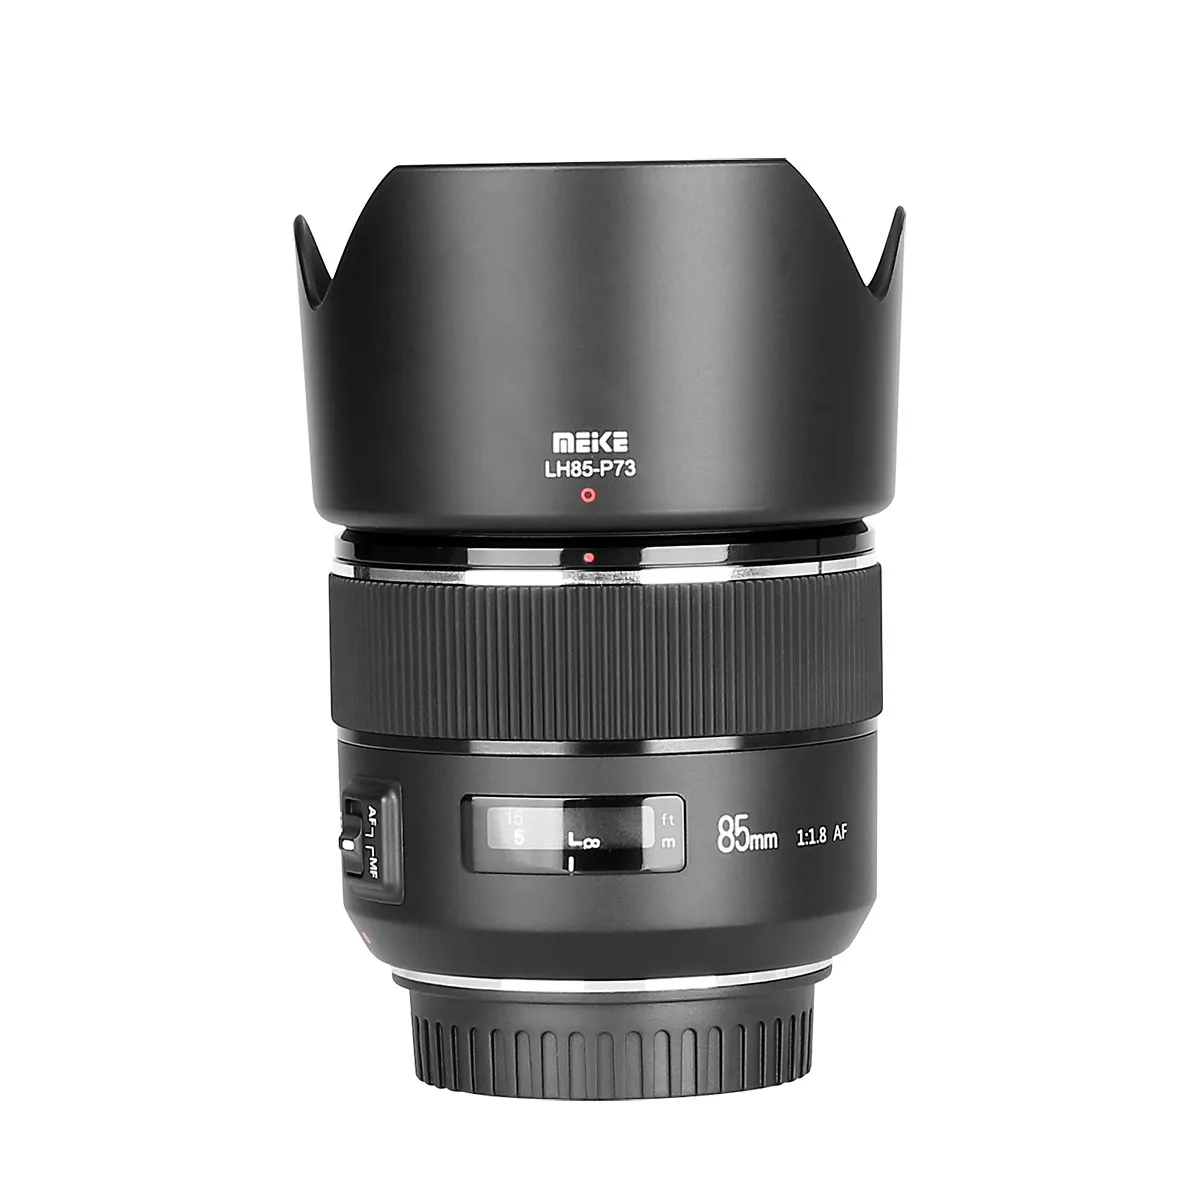 Meike 85mm F1.8 Auto Focus Full Frame Aspherical Medium Telephoto Portrait Prime Lens for Canon EOS EF Mount DSLR Cameras 6D2 5D